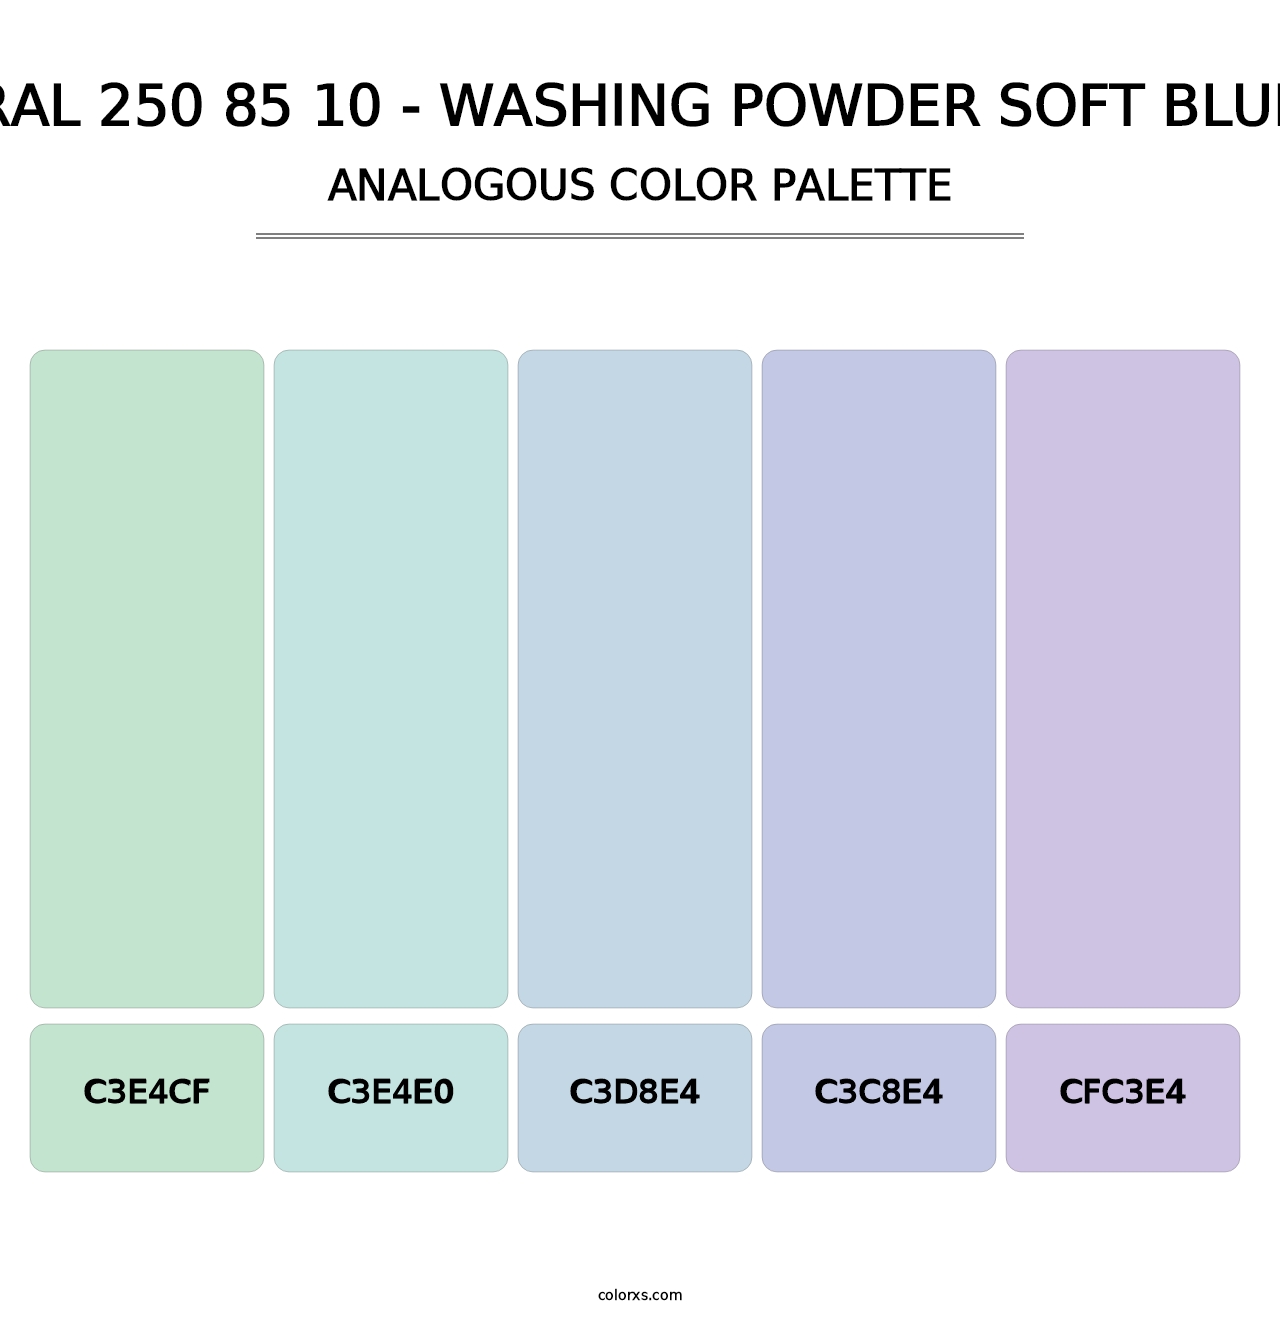 RAL 250 85 10 - Washing Powder Soft Blue - Analogous Color Palette